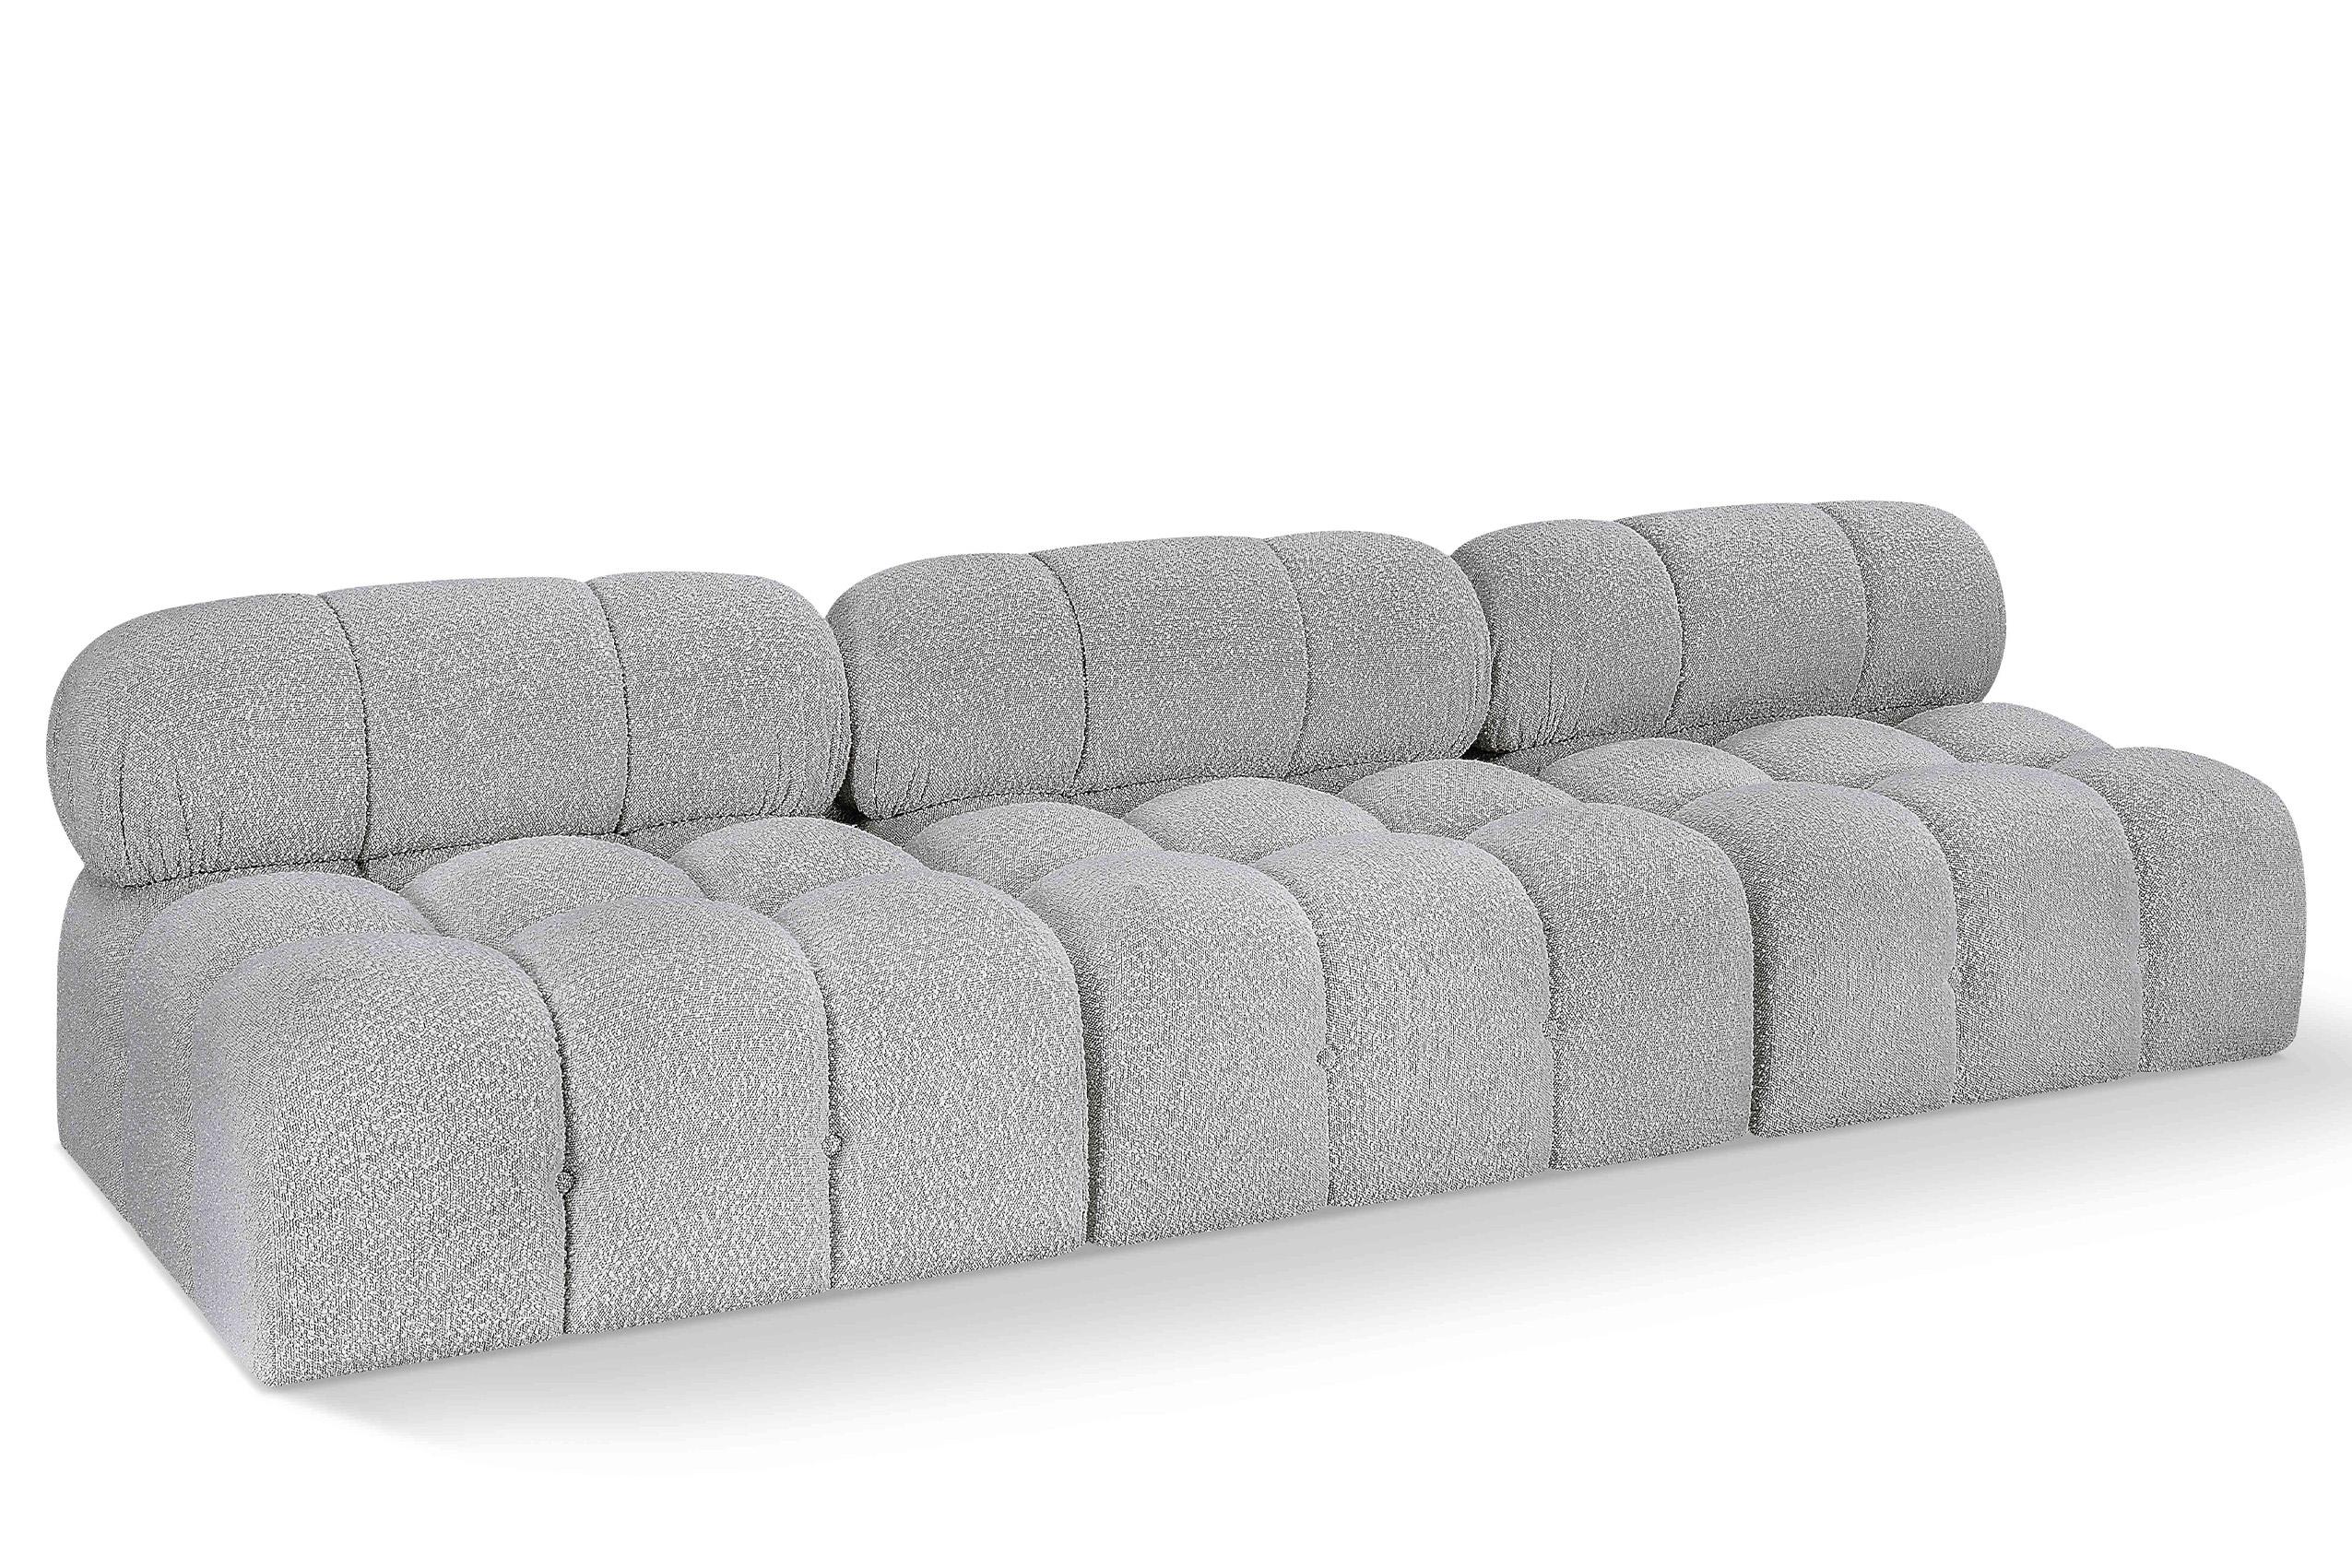 Contemporary, Modern Modular Sofa AMES 611Grey-S102B 611Grey-S102B in Gray 